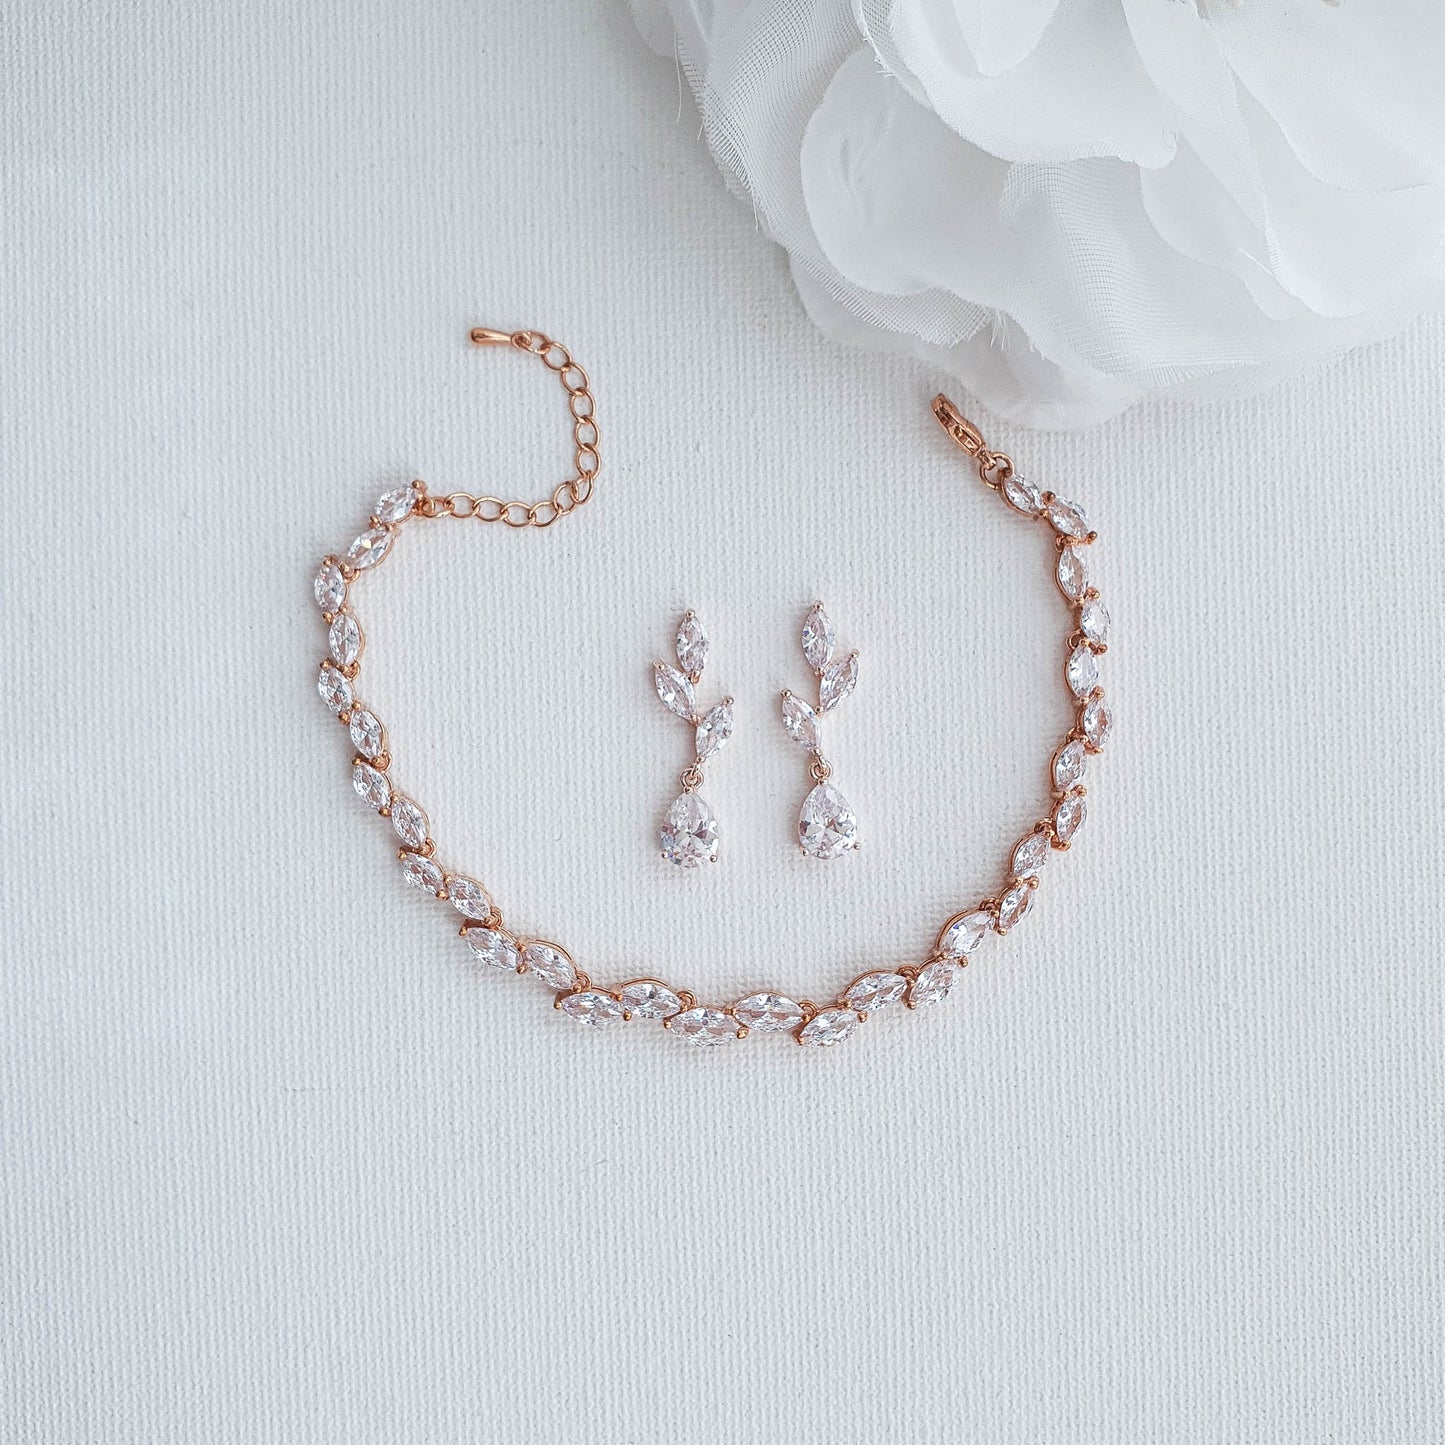 Wedding Leaf Bracelet and Earrings Set in Silver-Taylor